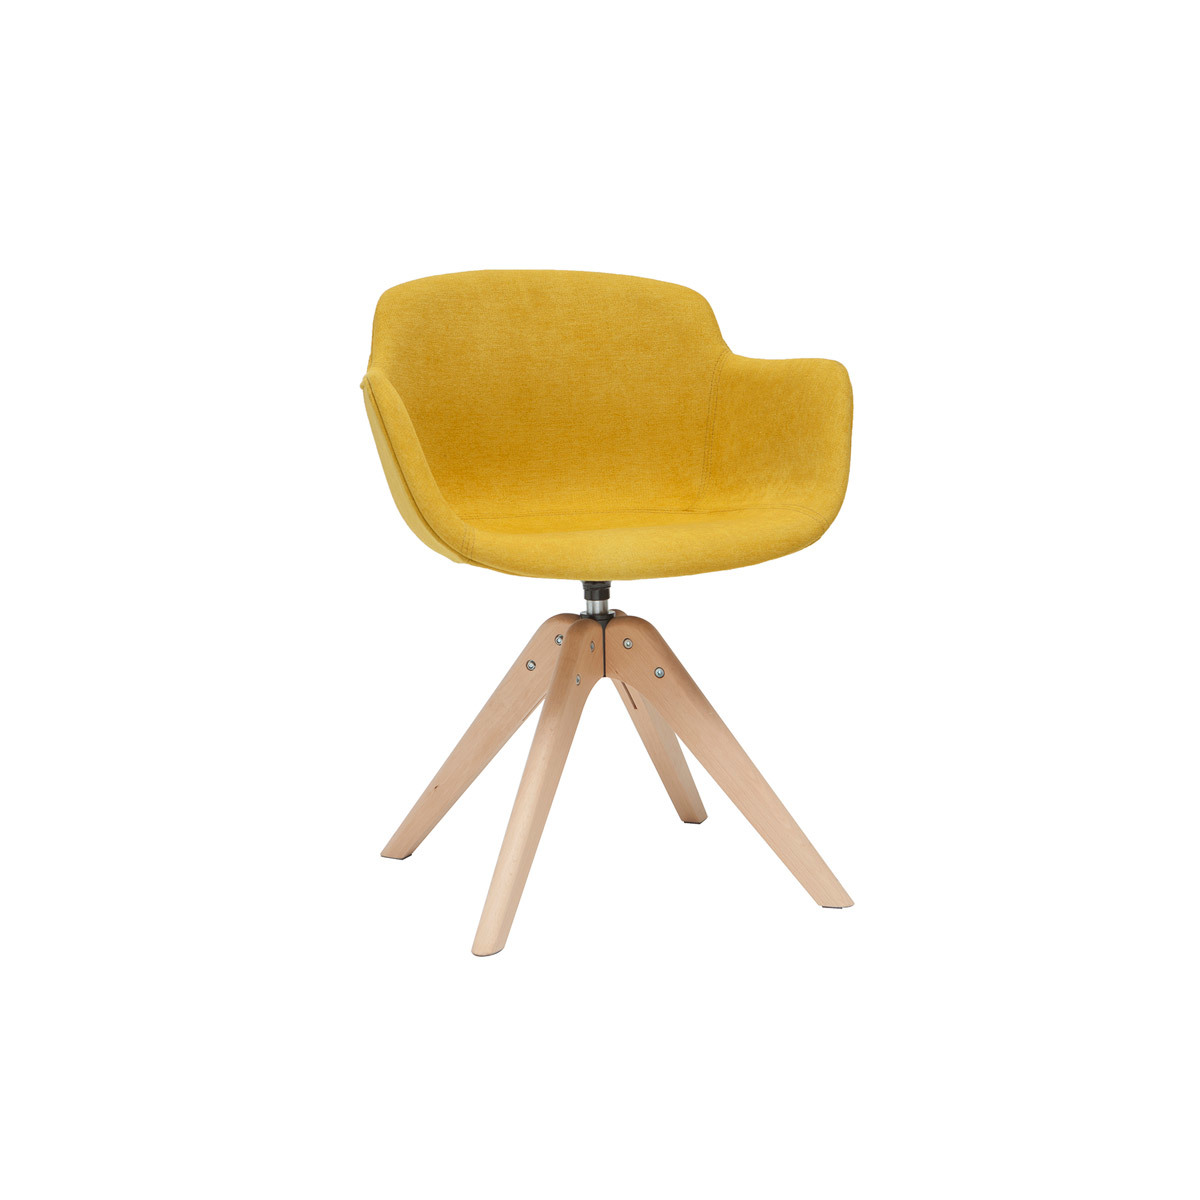 Chaise design tissu effet velours jaune moutarde et bois AARON vue1